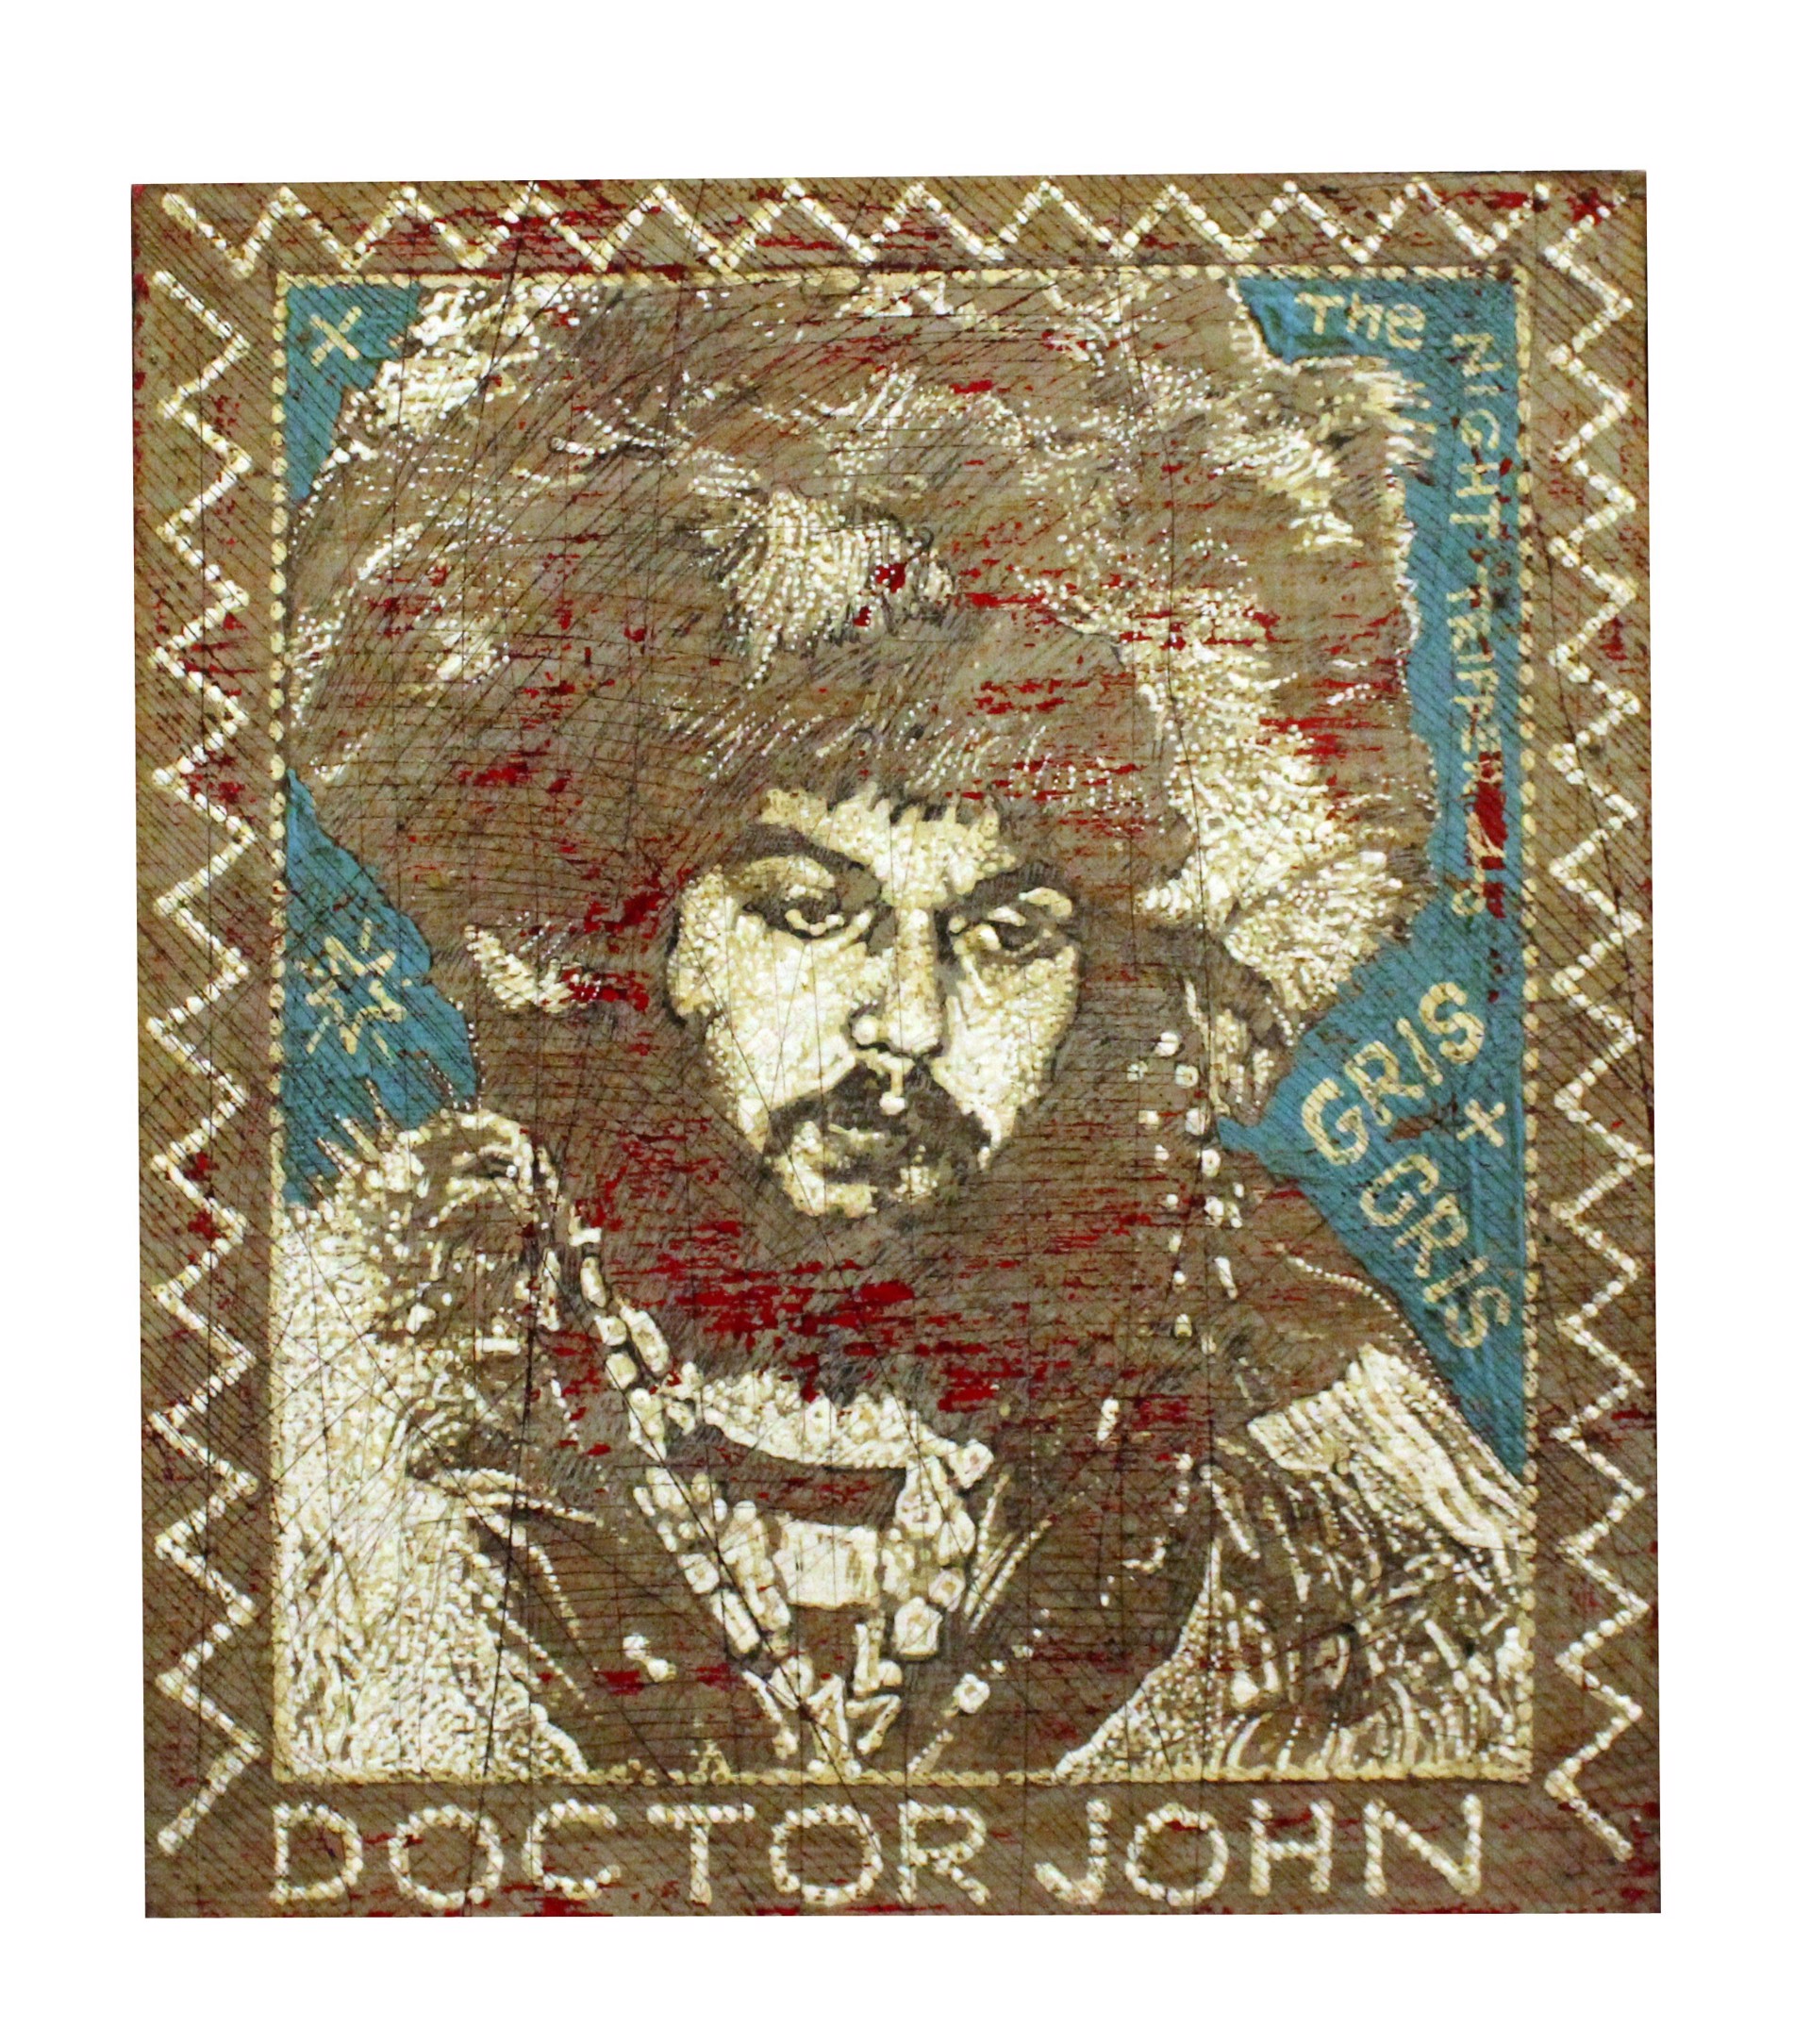 Doctor John by Jon Langford